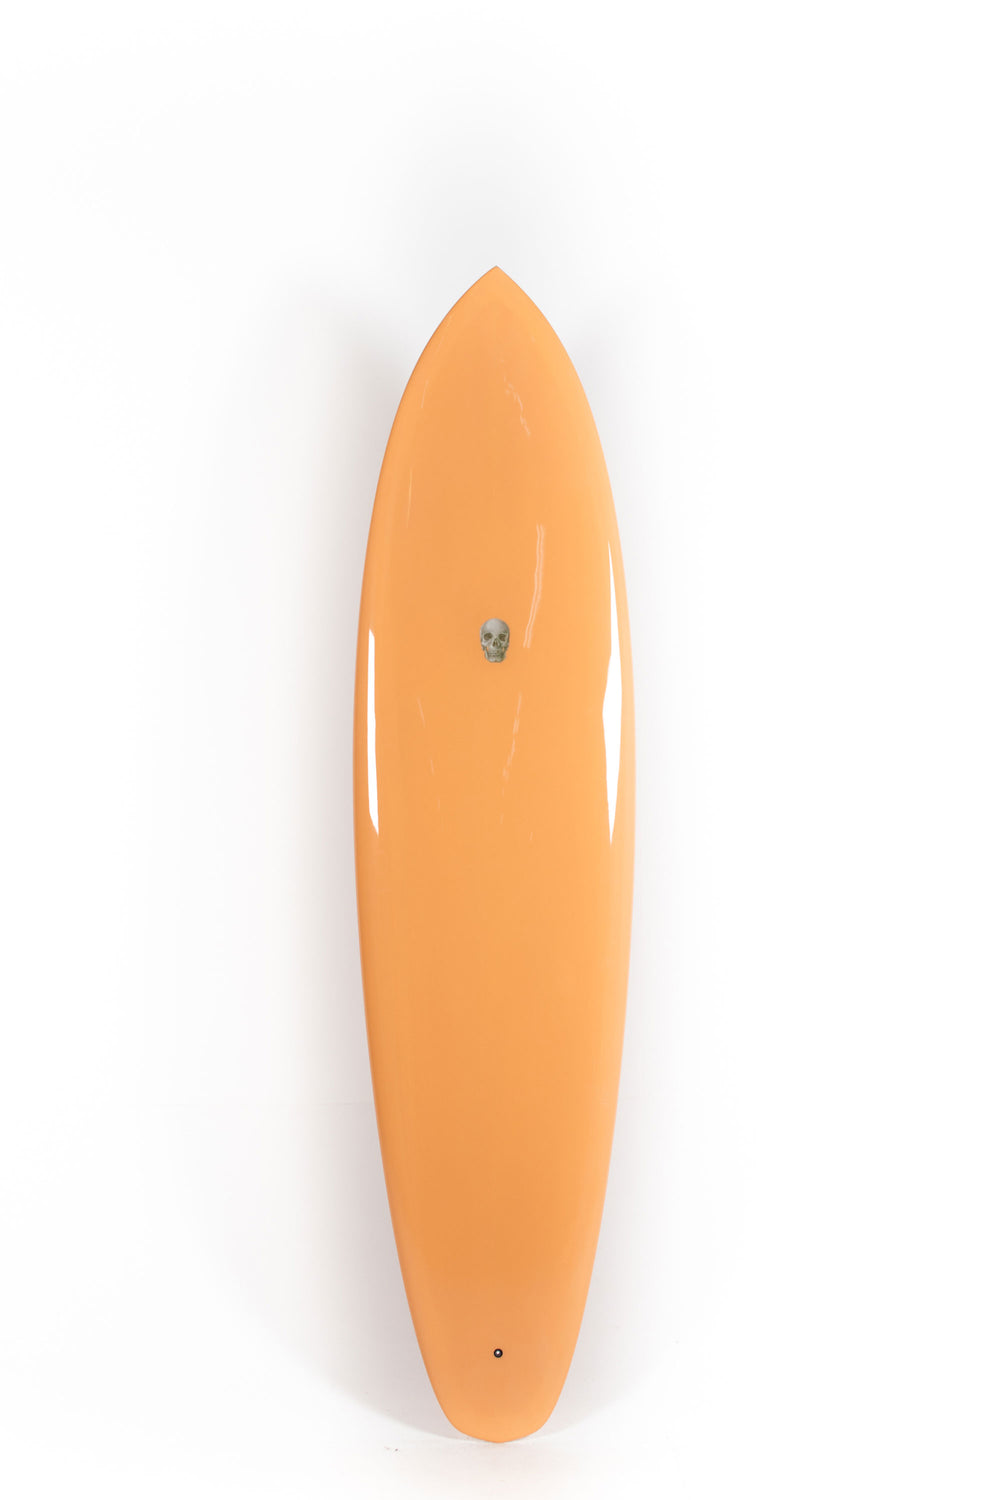 Pukas Surf Shop - Christenson Surfboards - ULTRA TRACKER - 7'4